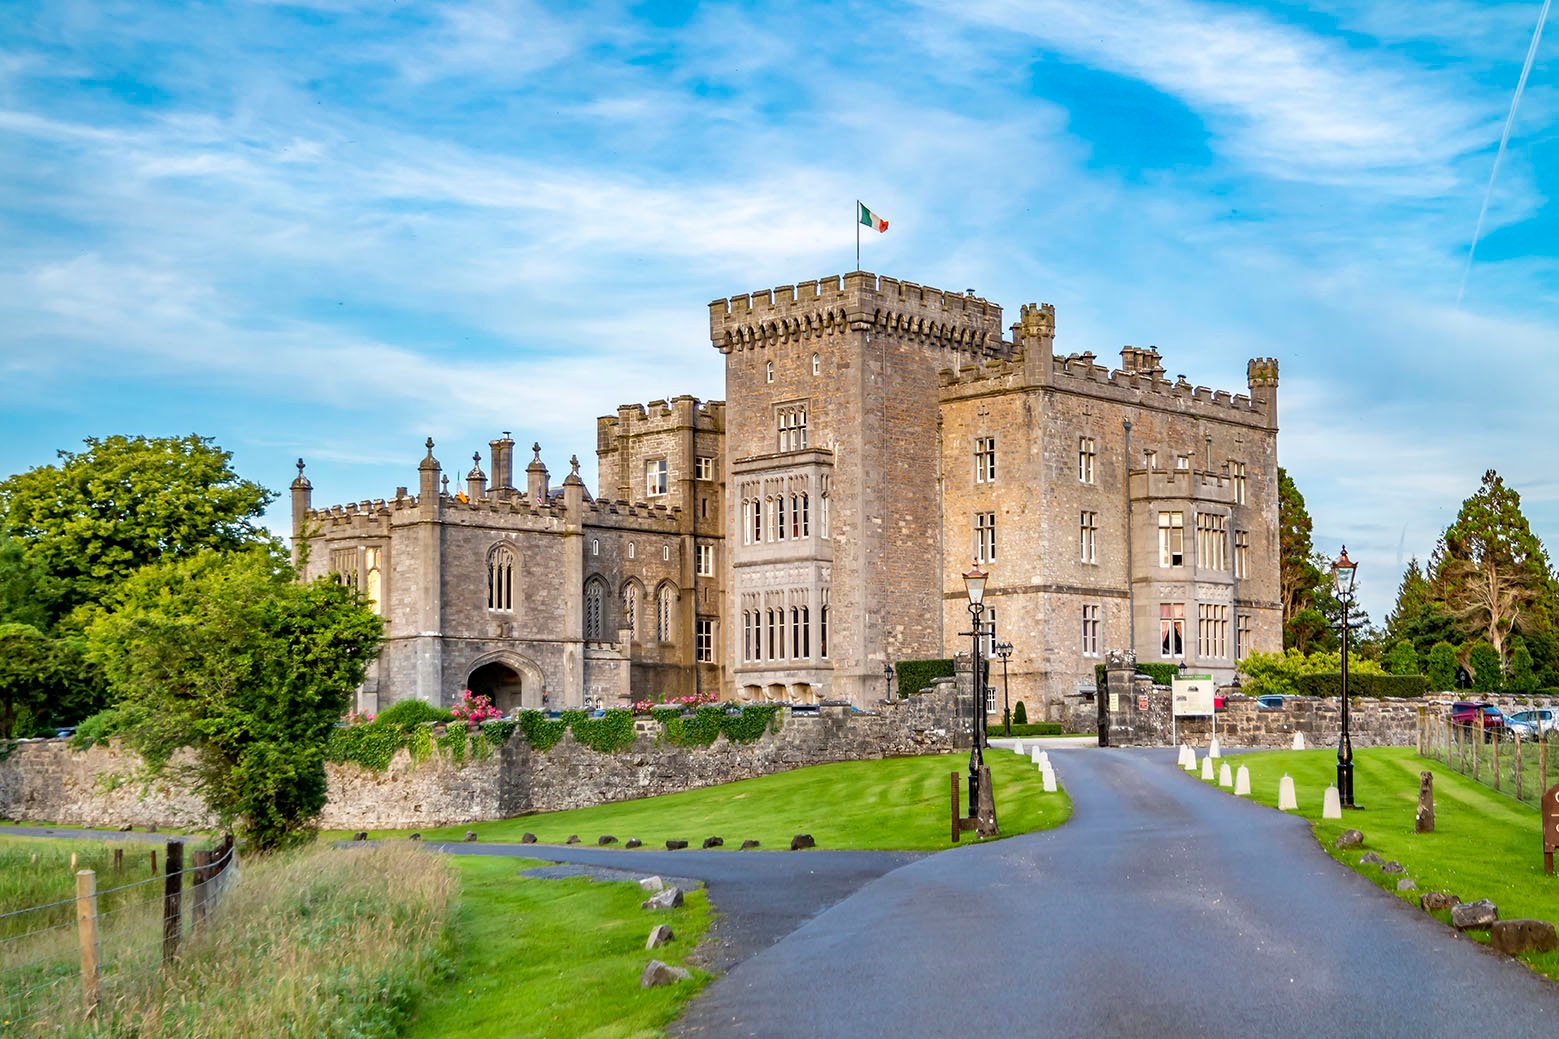 Markree Castle in Collooney, County Sligo, Ireland.